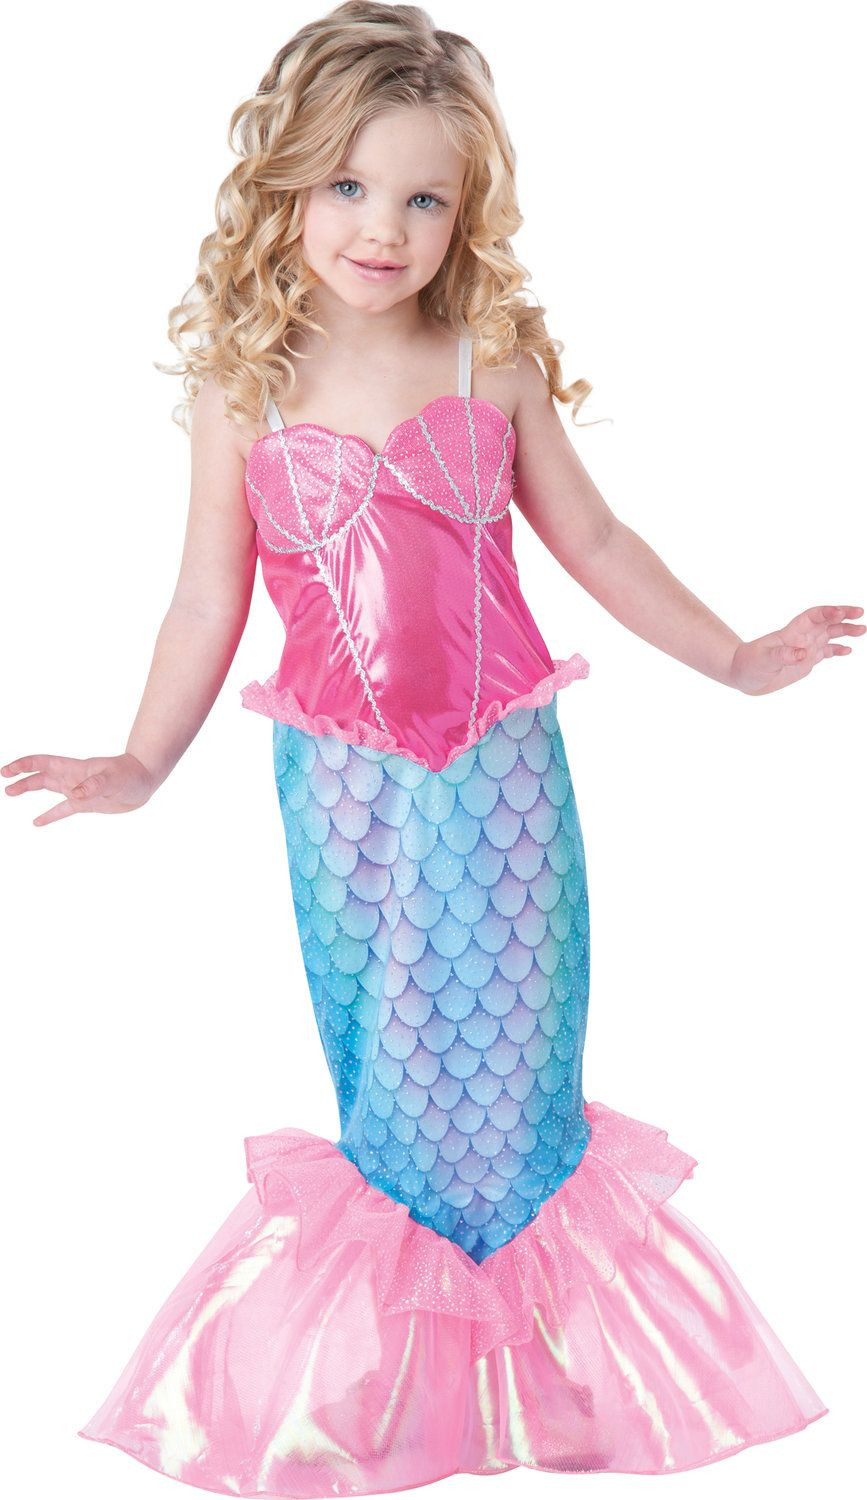 DIY Toddler Mermaid Costume
 Pin by Cori Samskey on DIY and Crafts